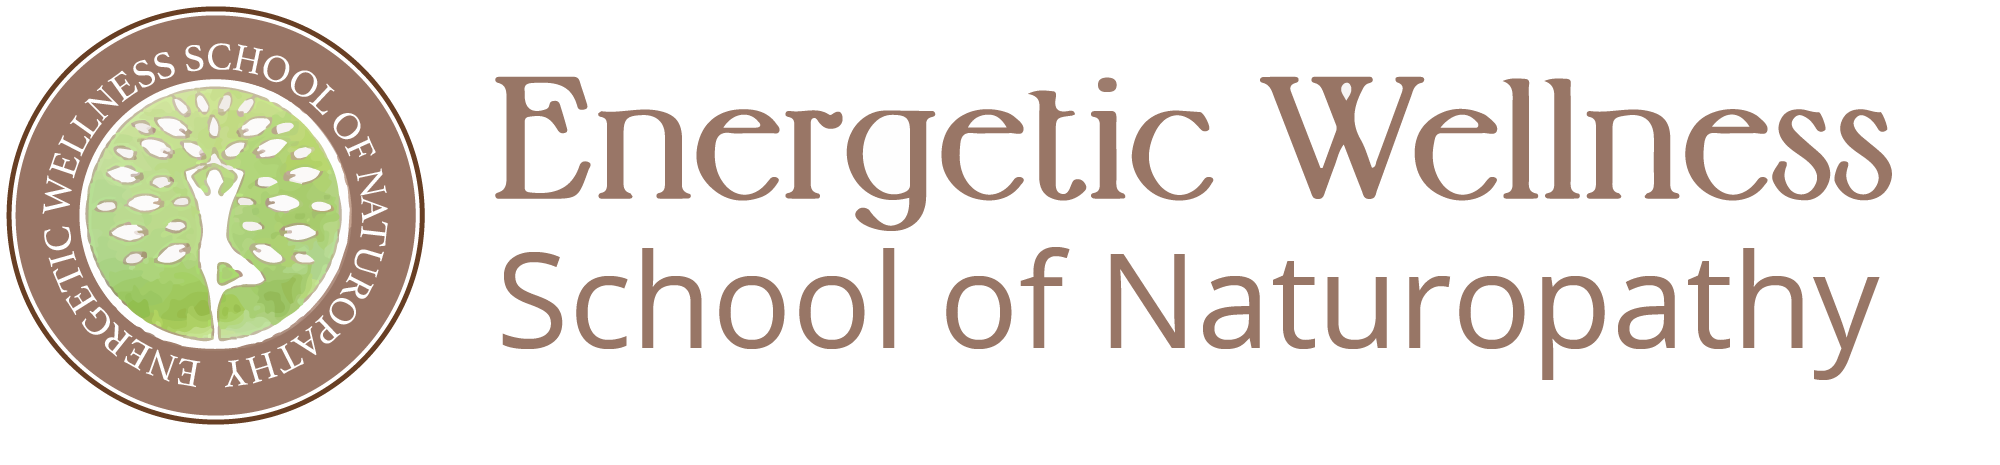 The School of Naturopathy